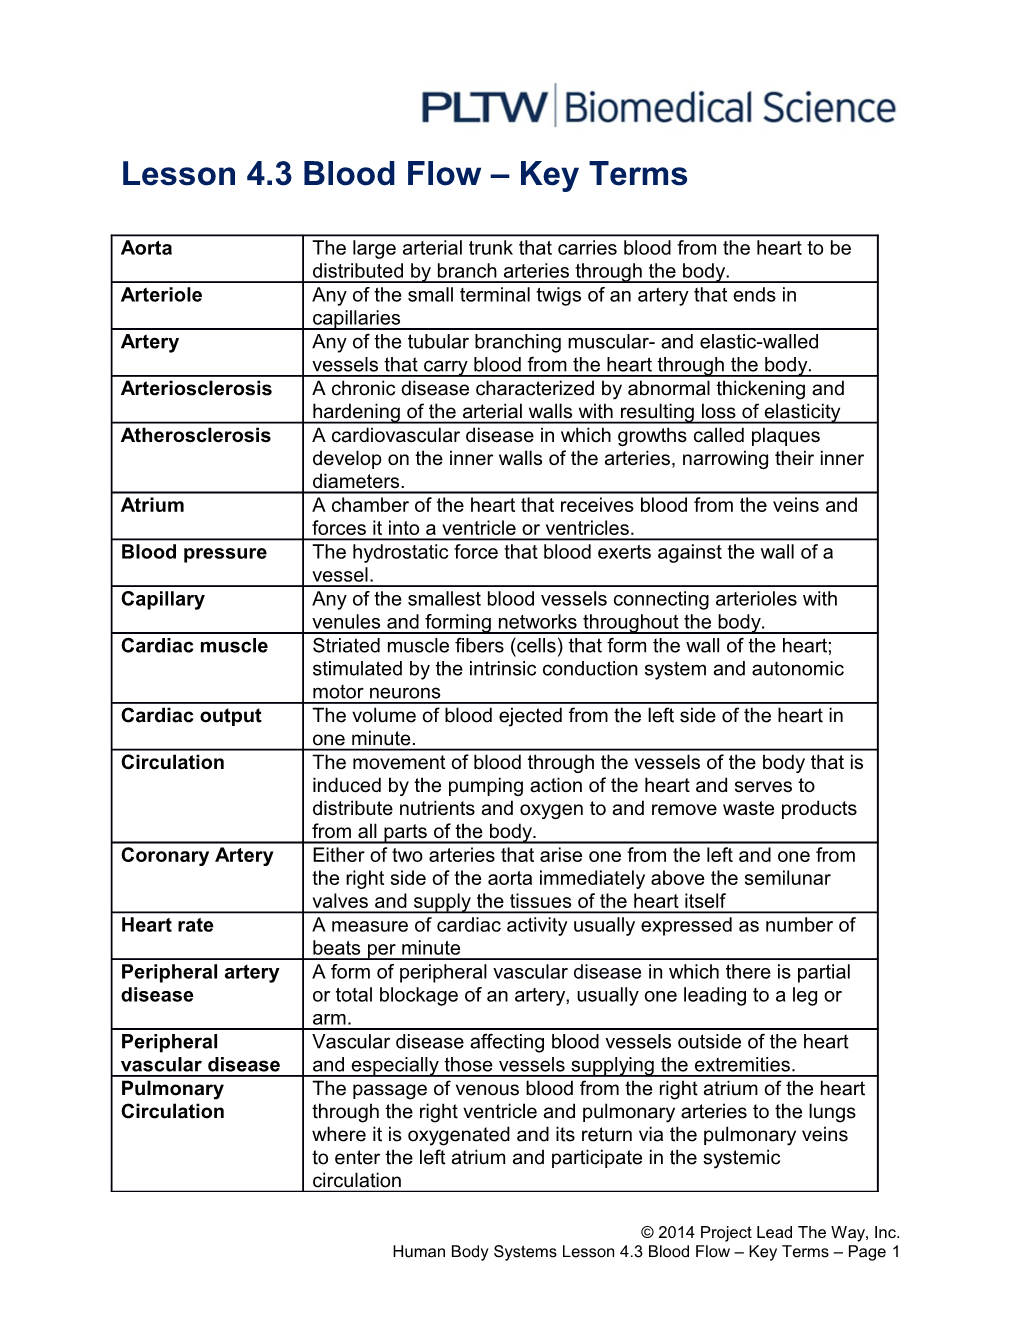 Lesson 4.3 Blood Flow Key Terms